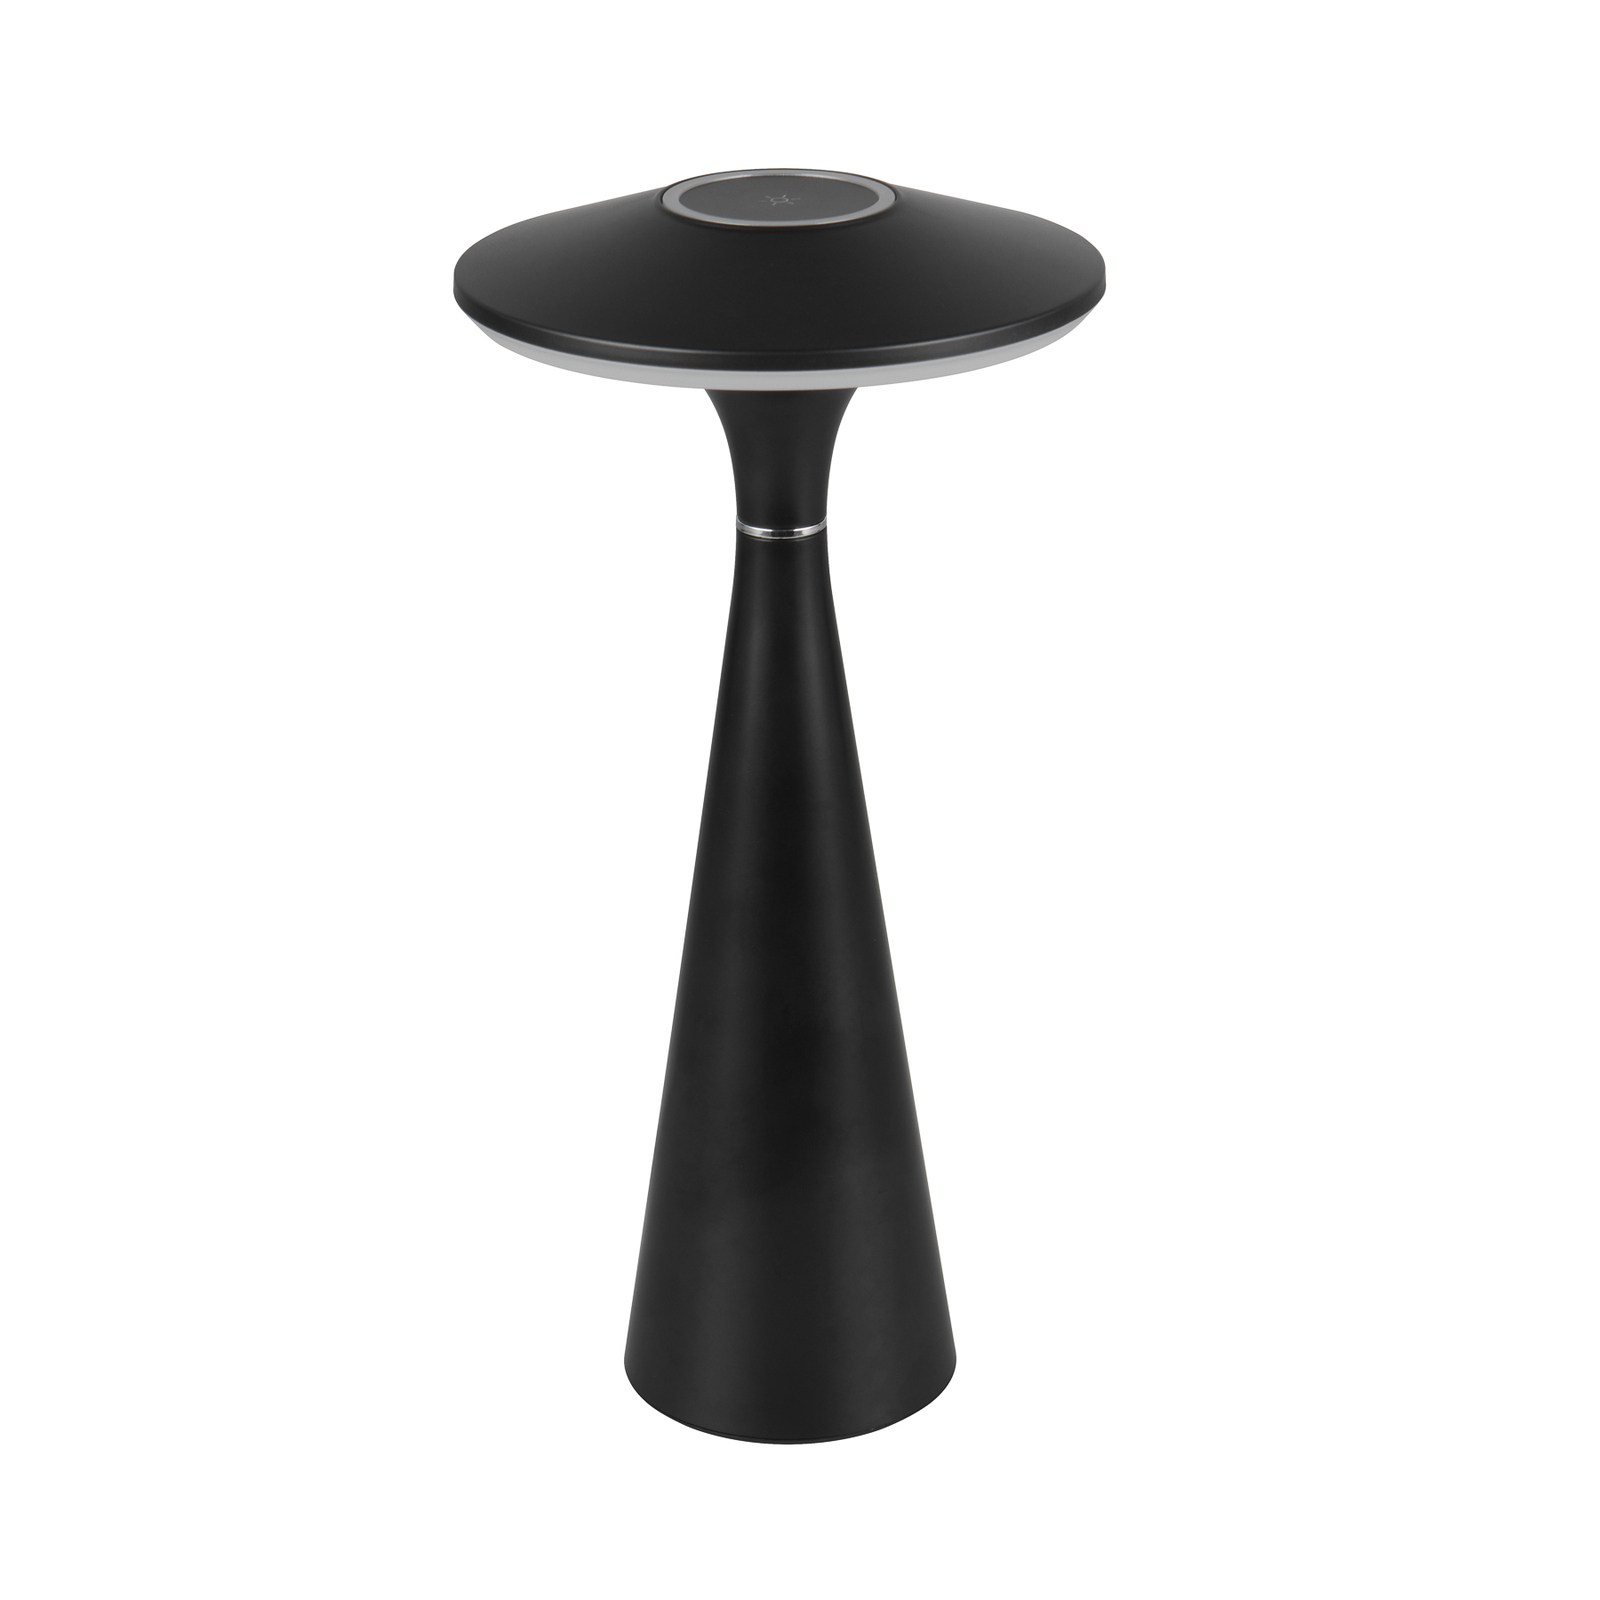 Torrez lámpara de mesa LED recargable, negra, altura 28,5 cm, CCT